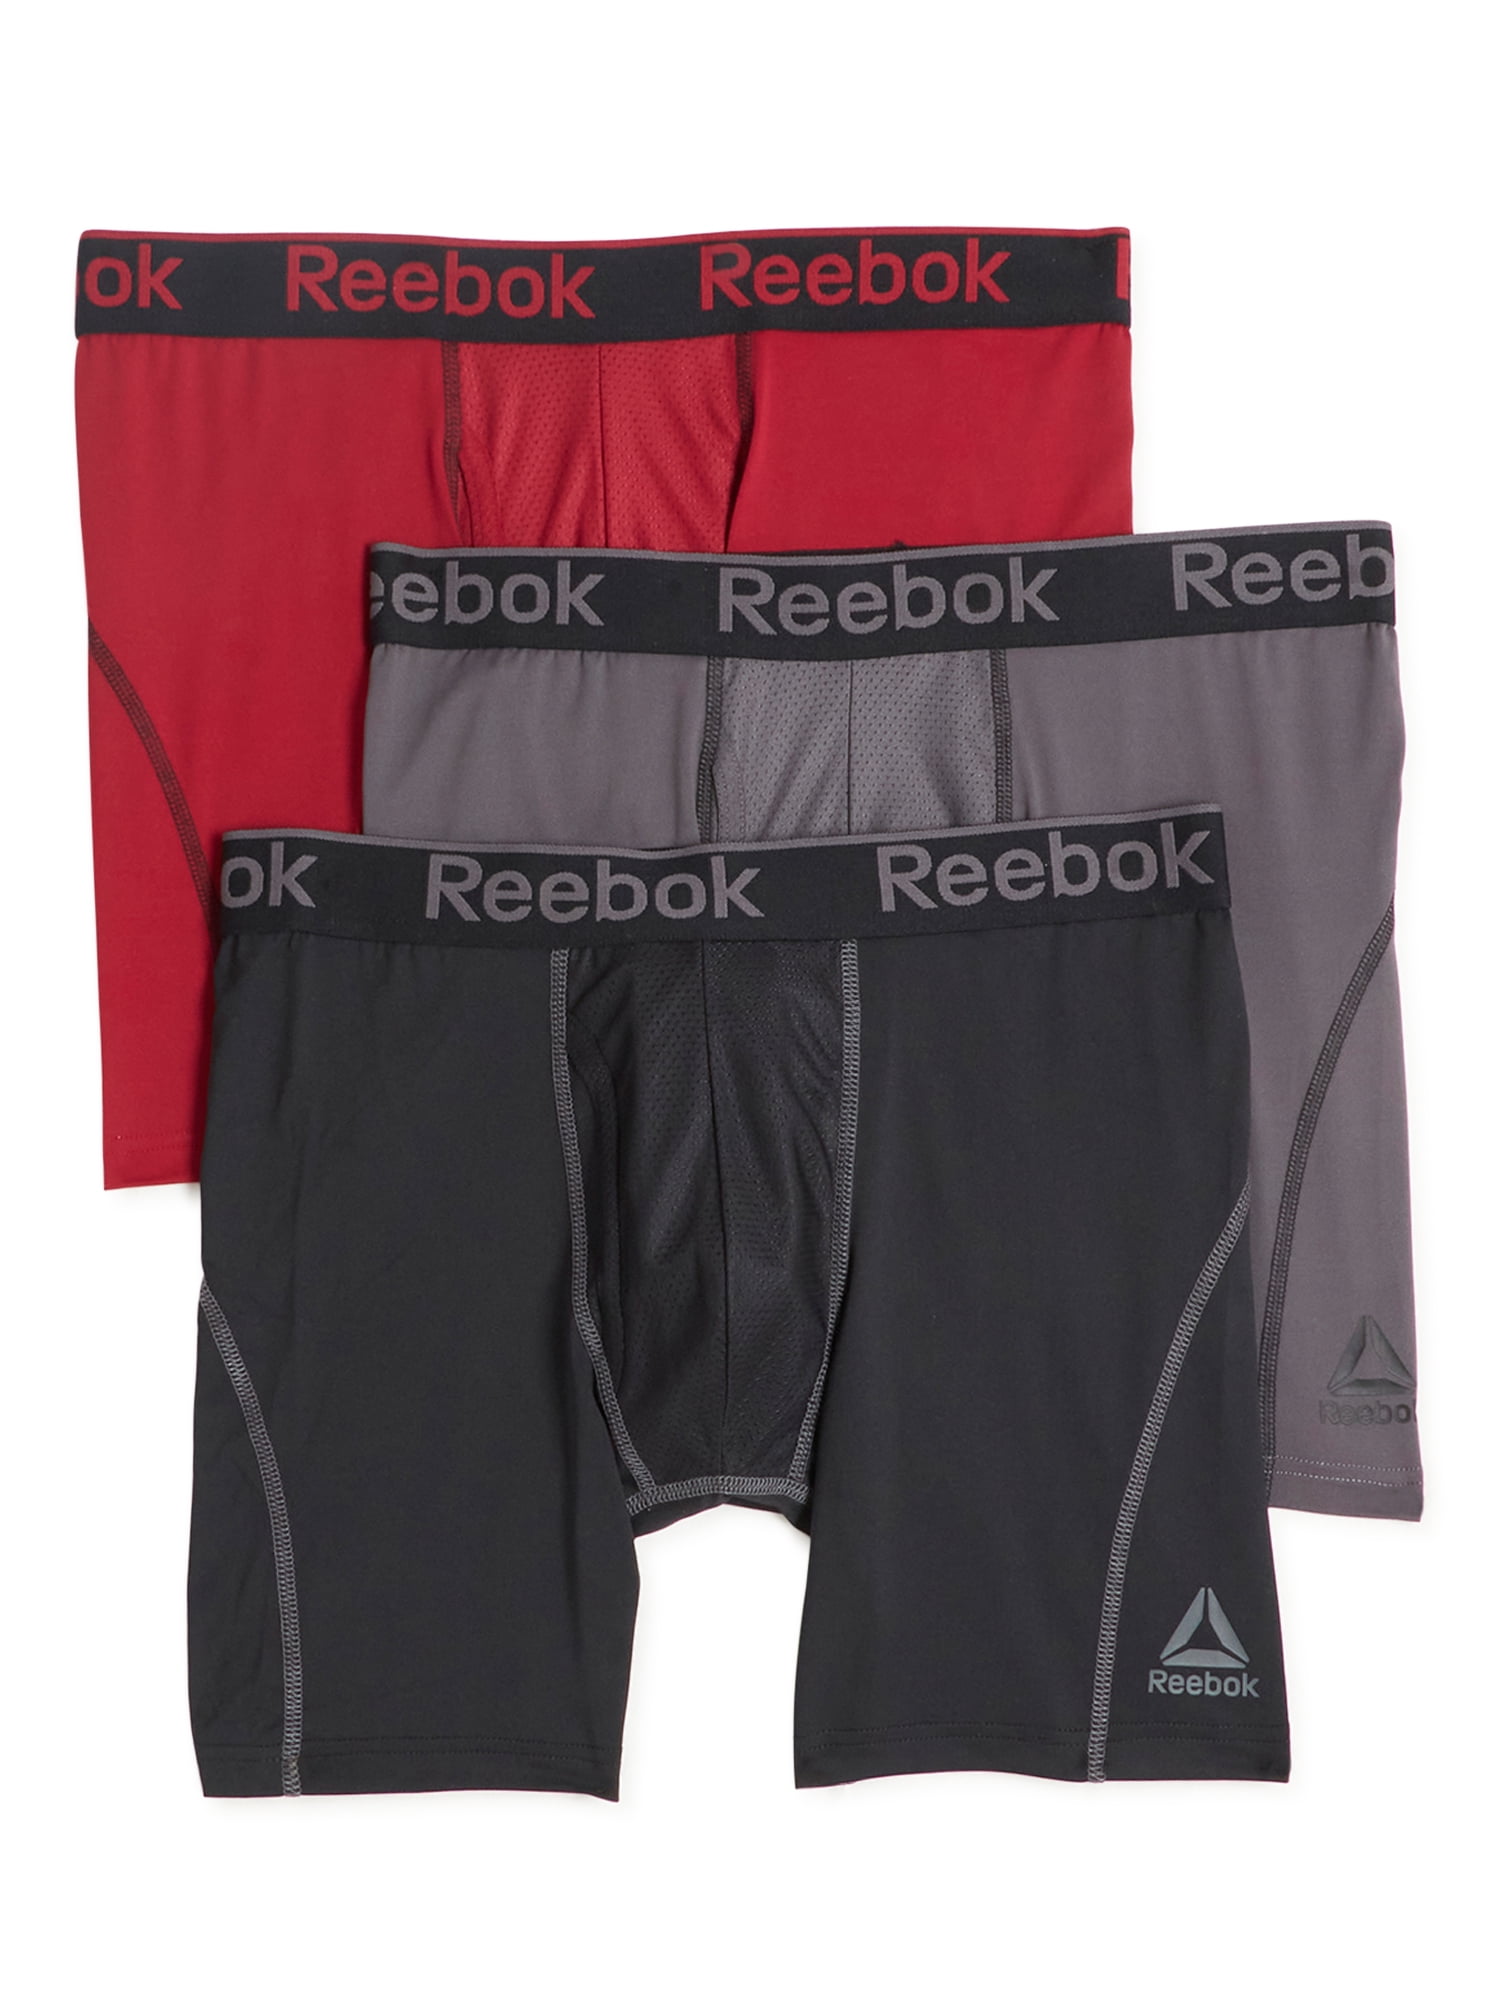 REEBOK Men's Performance Boxer Briefs, Black/Flame, 1X 